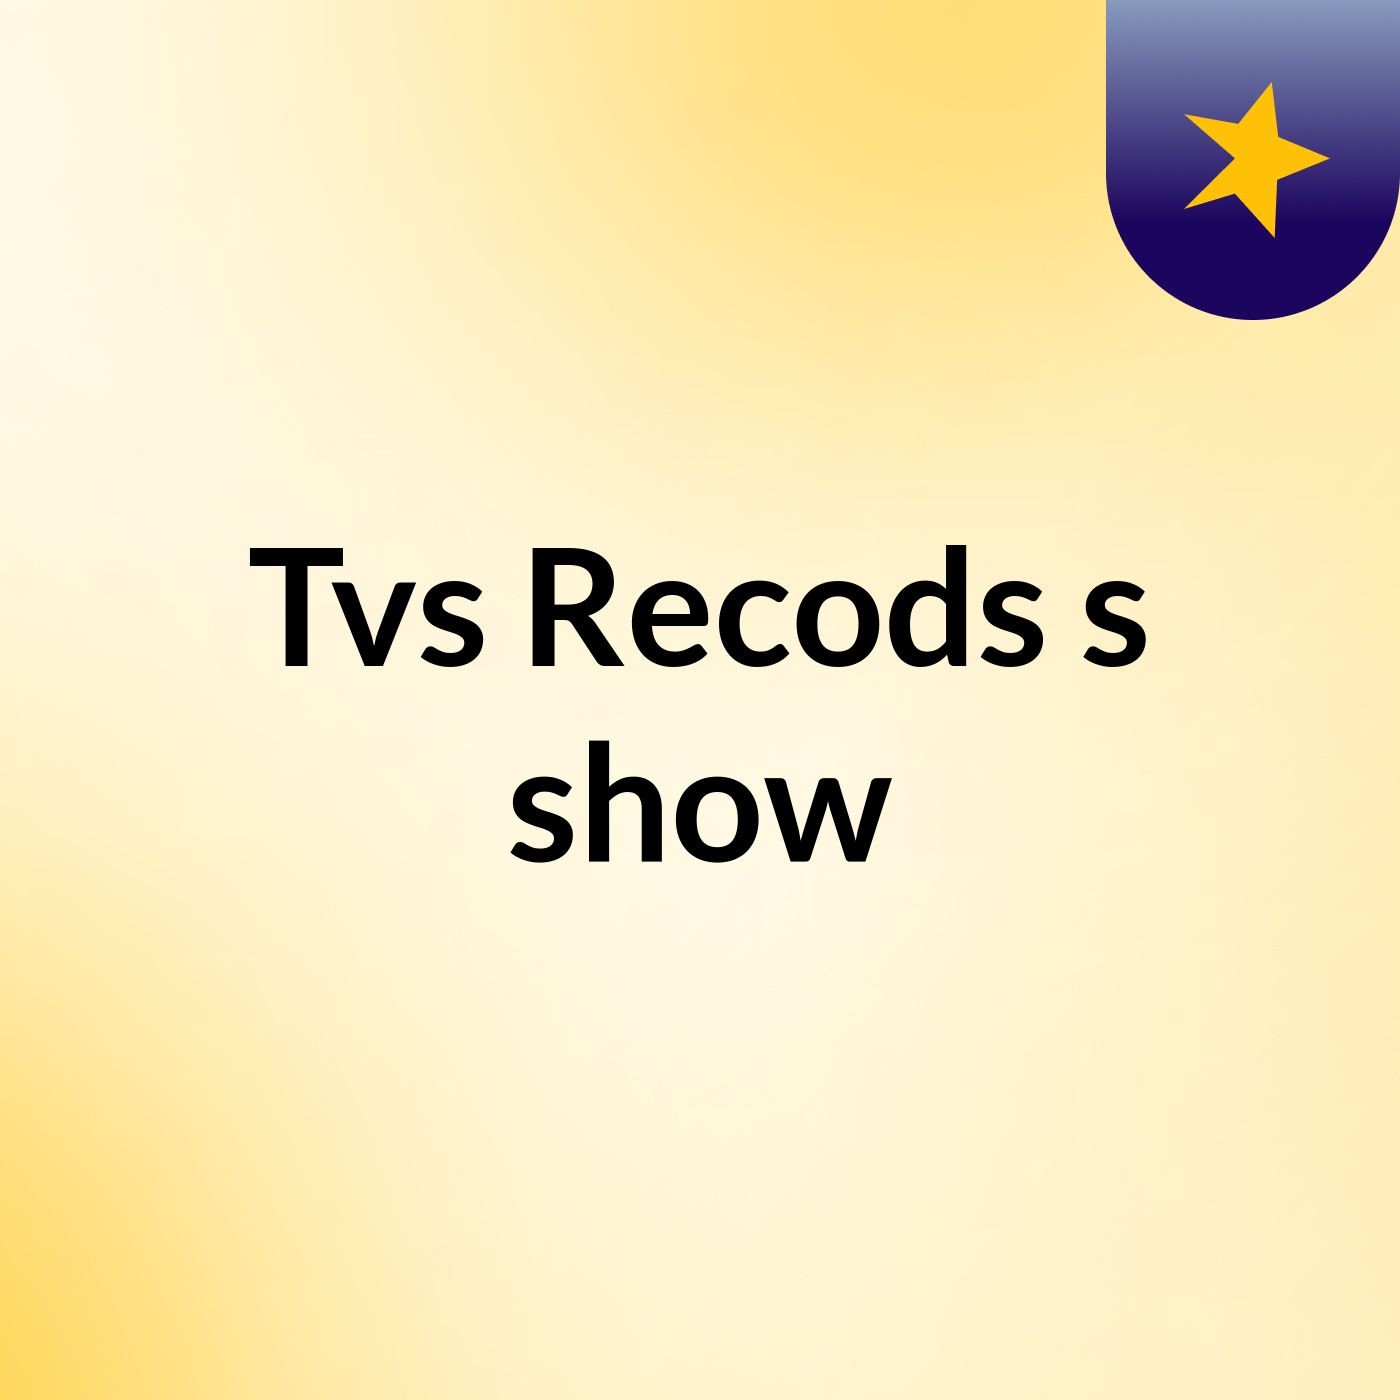 Tvs Recods's show